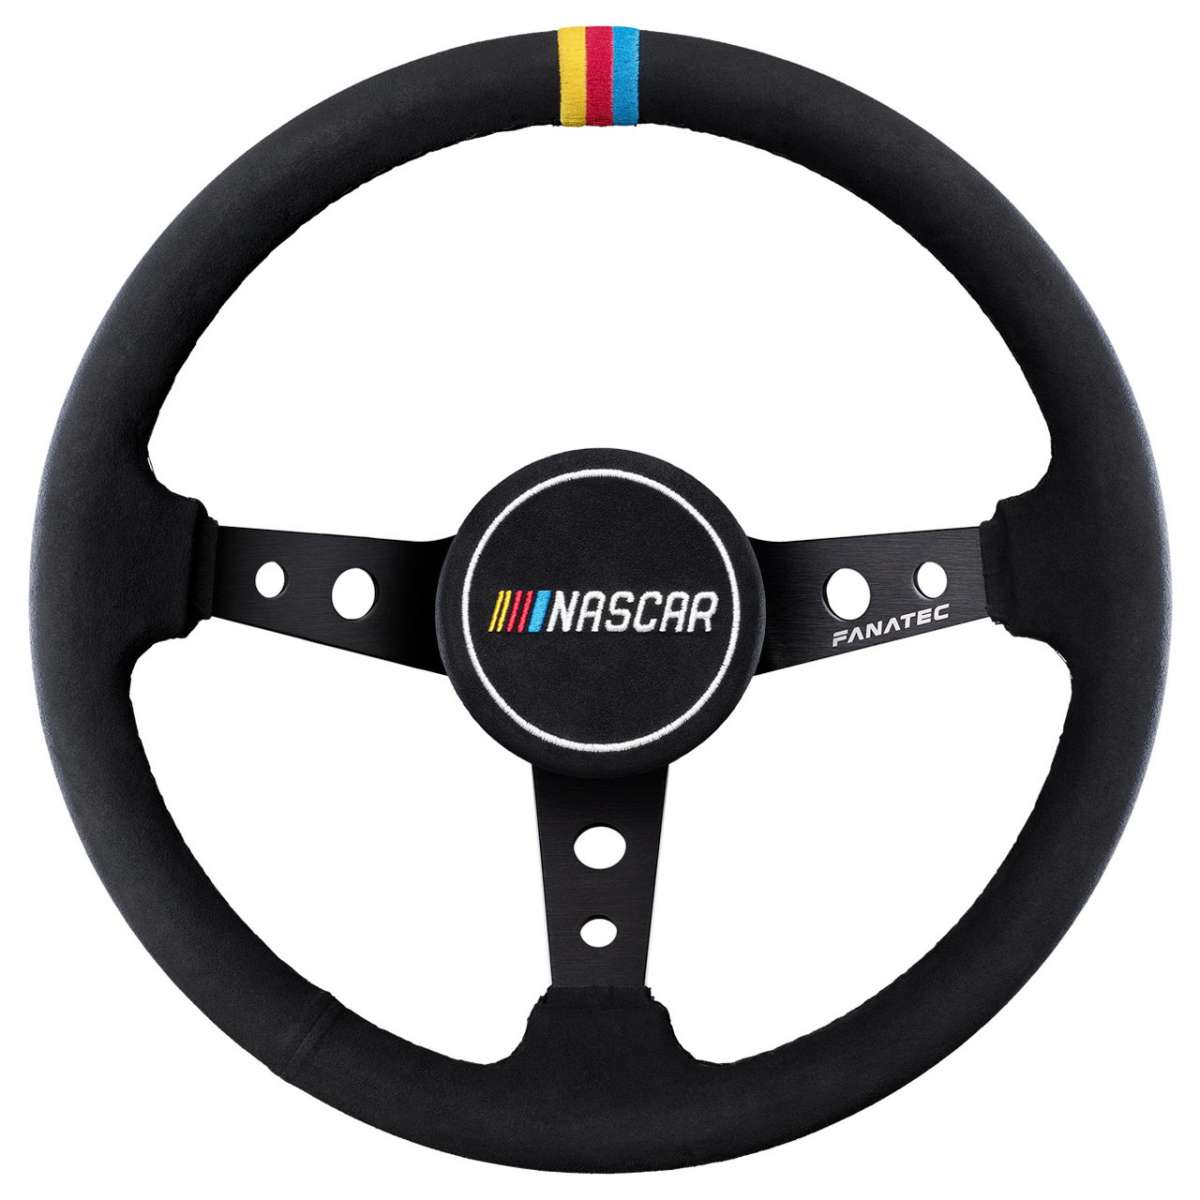 Fanatec NASCAR Wheel Rim